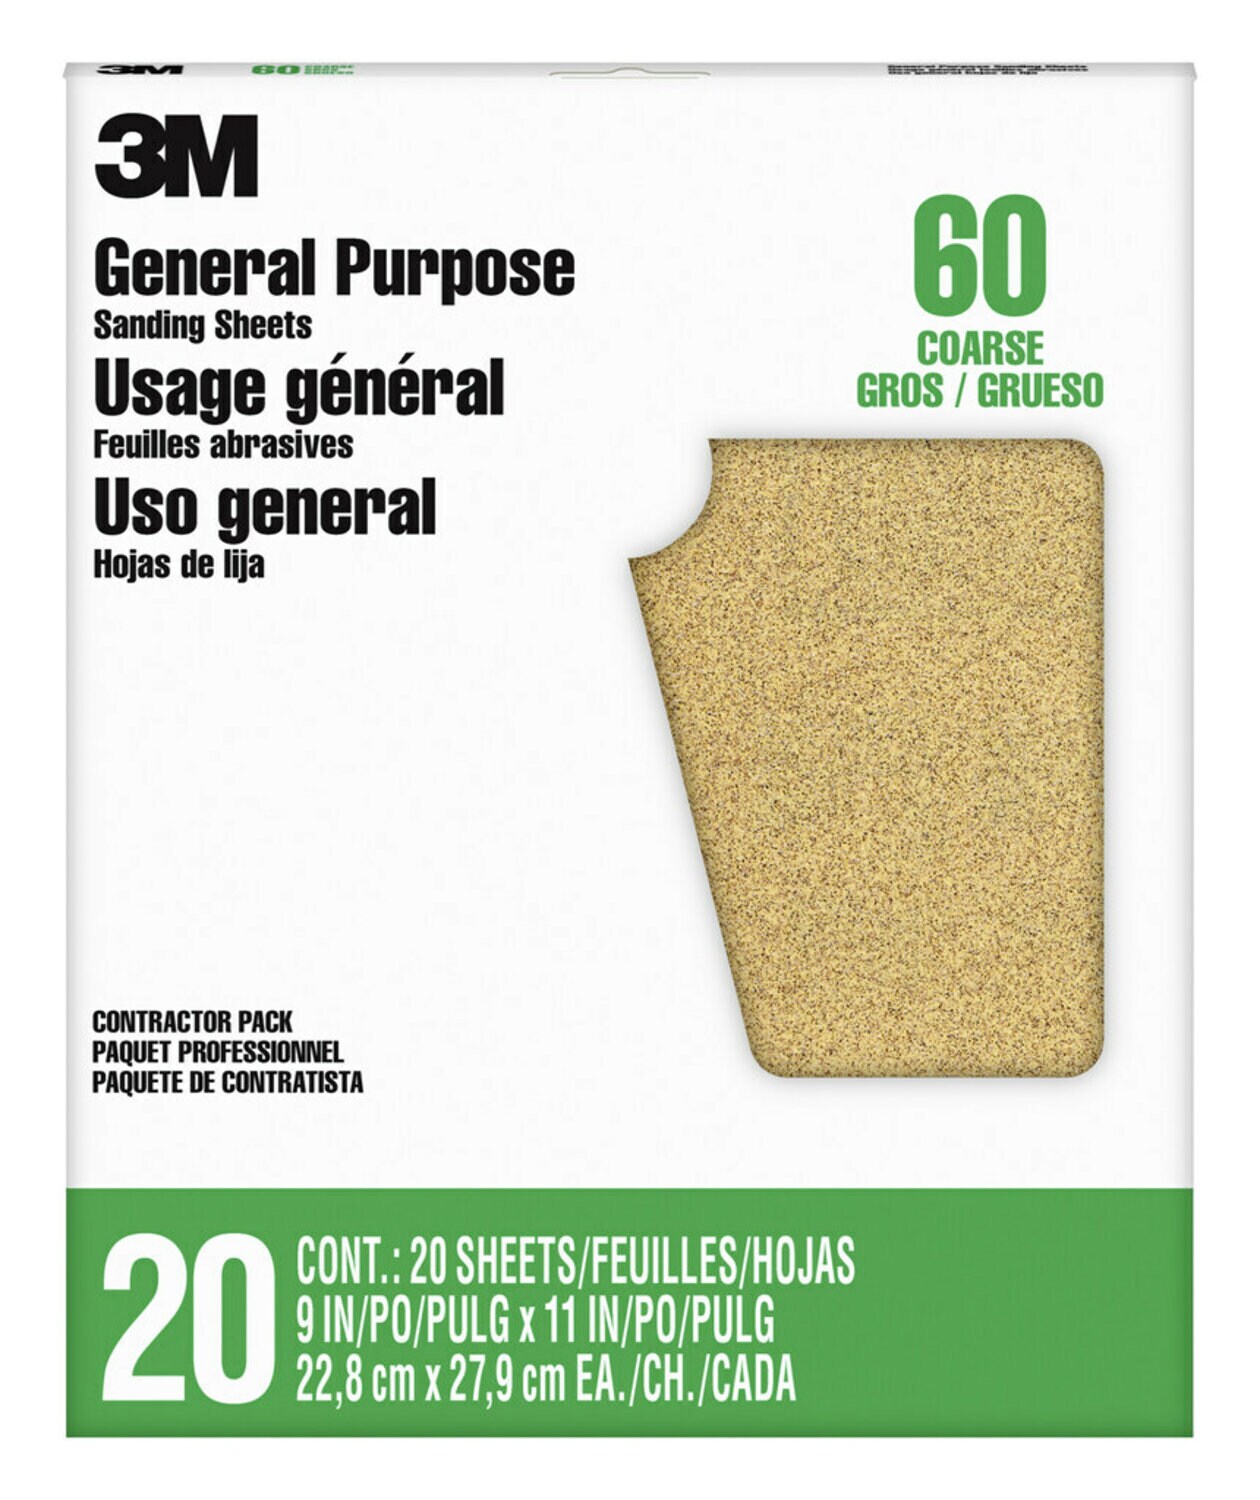 7100091889 - 3M General Purpose Sanding Sheets, 87591NA-20, 9 in x 11 in, 60 grit, Coarse grit, 20 sheets/pk,
5 pks/cs